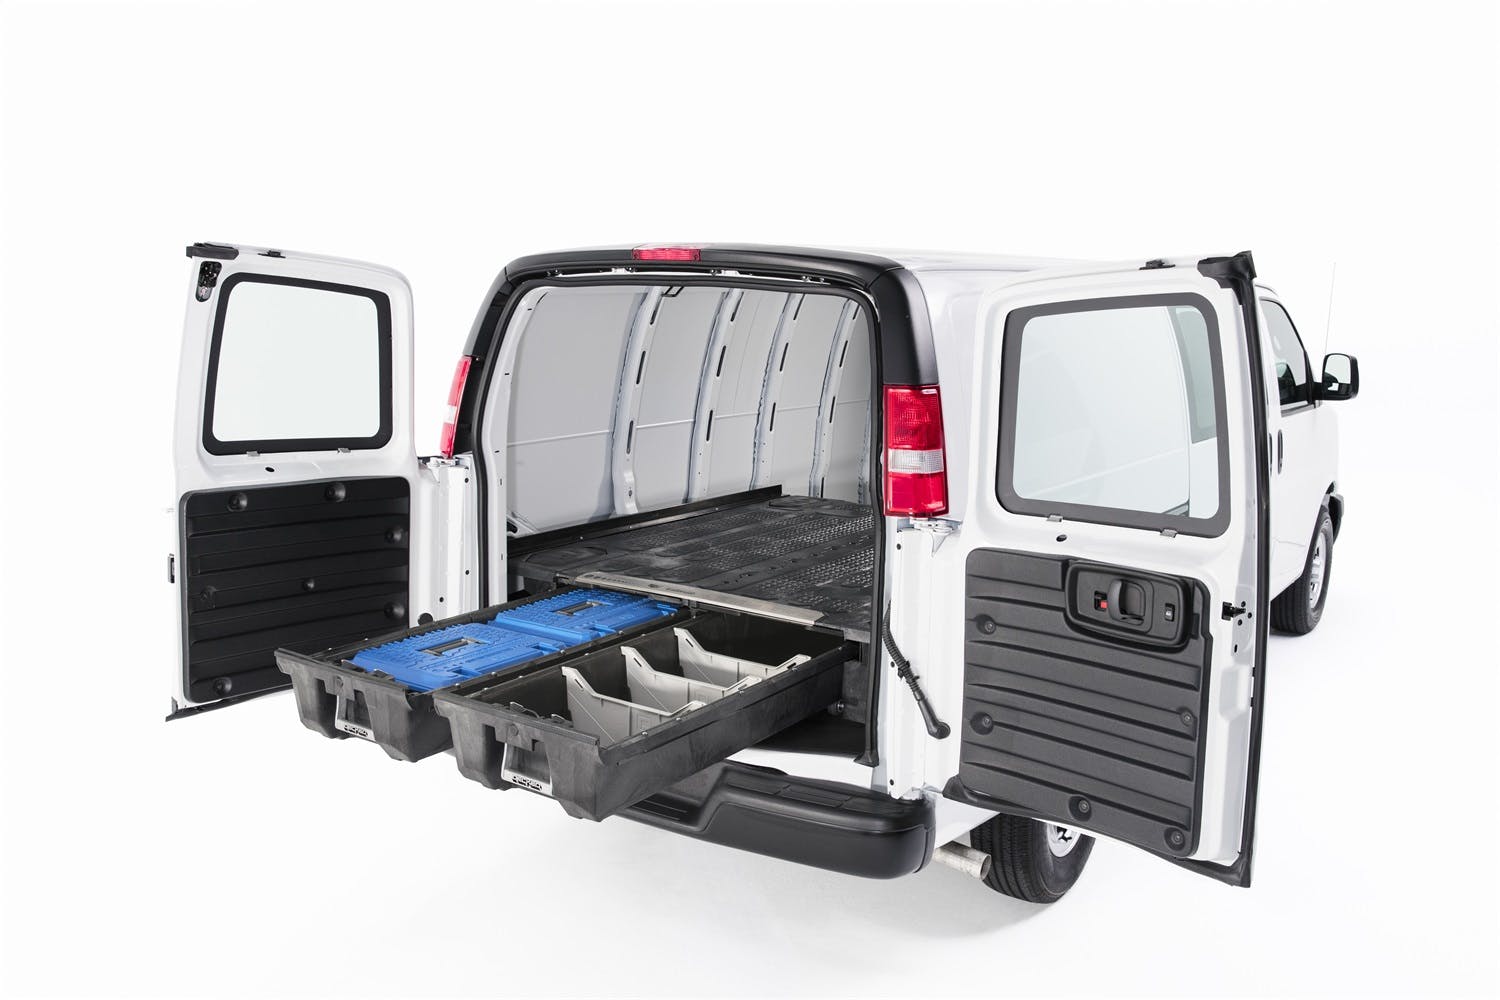 DECKED VNFD92ECRG55 64.54 Two Drawer Storage System for A Full Size Cargo Van